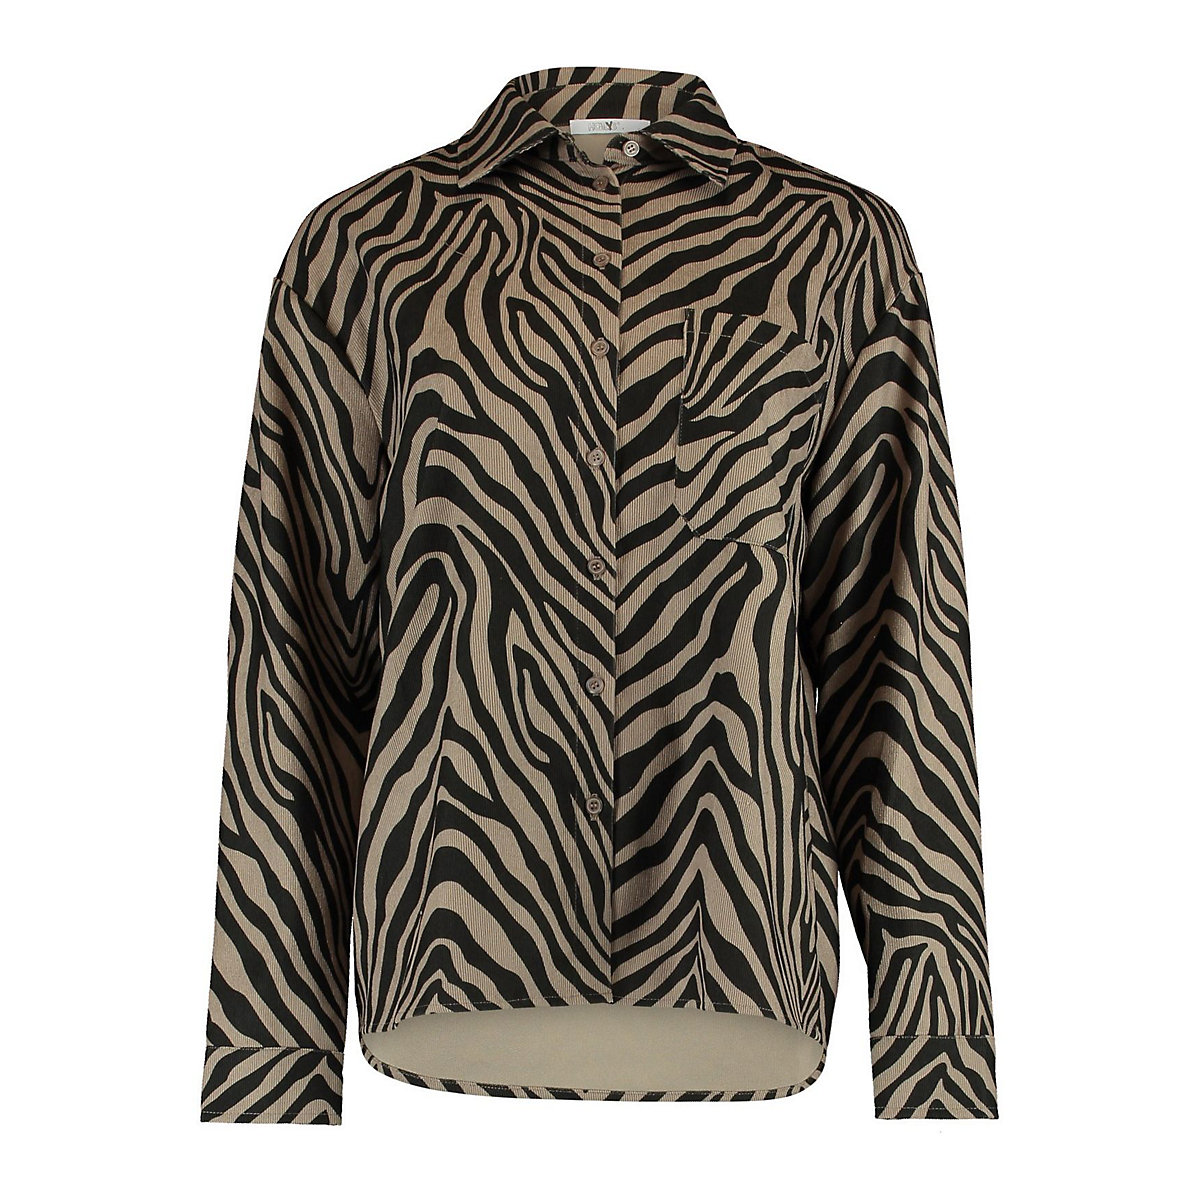 Hailys Gemusterte Hemd Bluse Zebra Animal Print Business Shirt MARIE braun